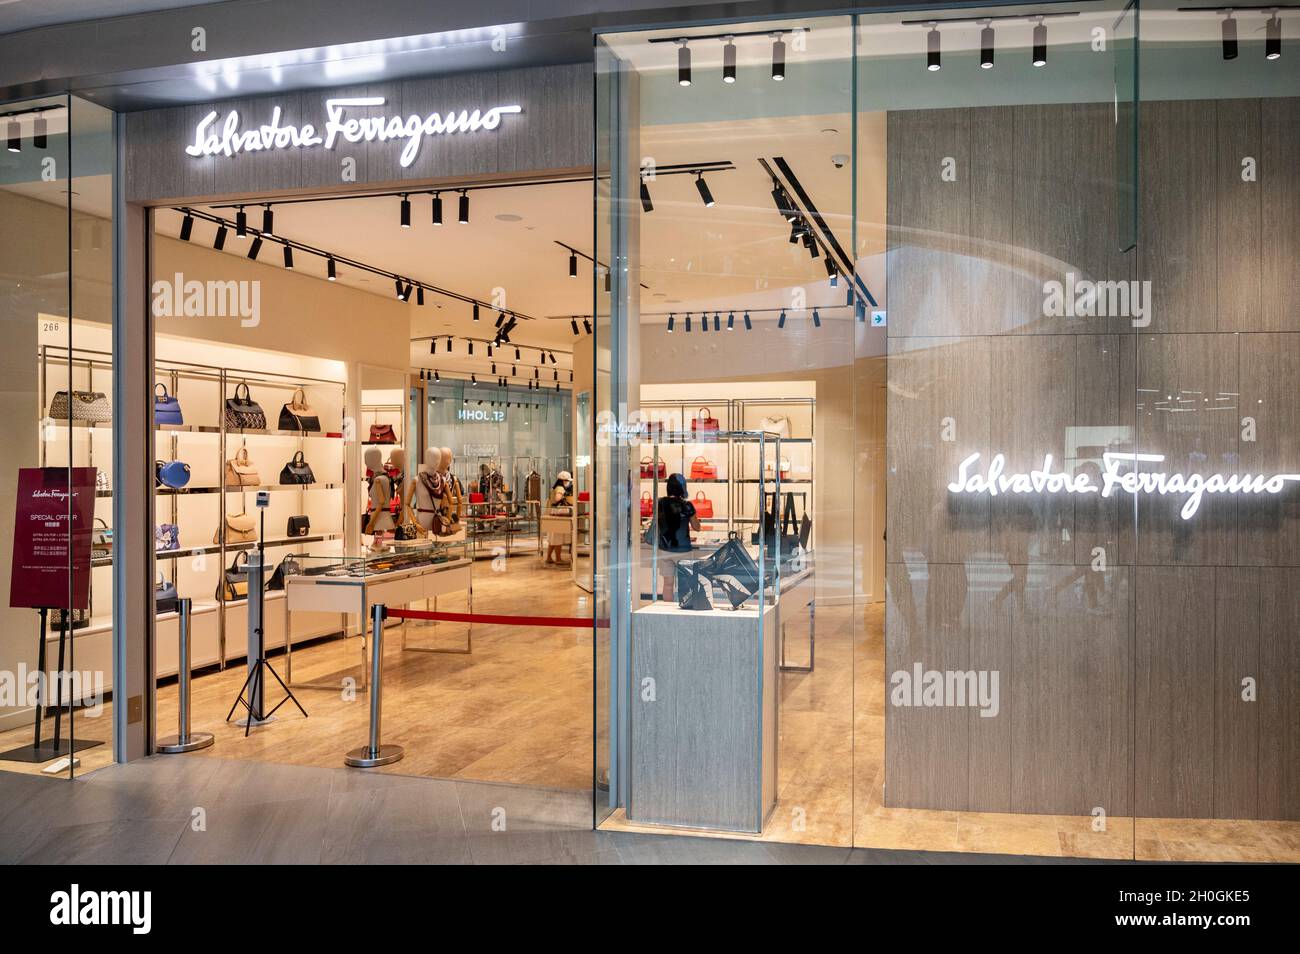 Italian luxury shoe brand Salvatore Ferragamo store and logo seen in Hong Kong. Stock Photo